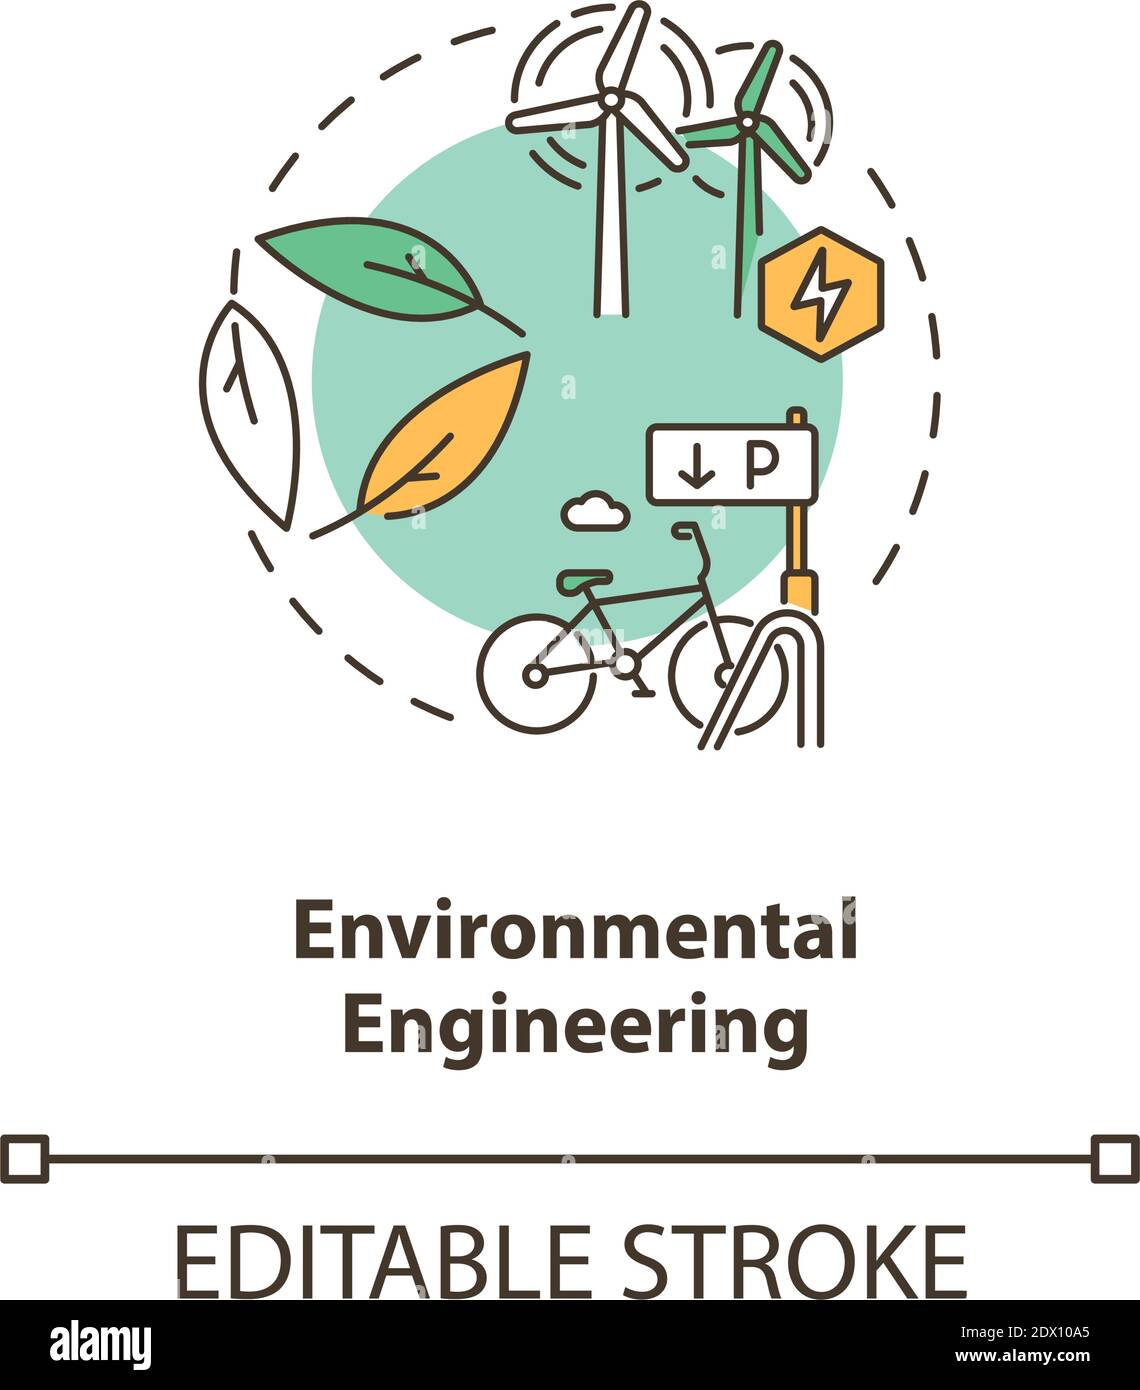 environmental engineering logo